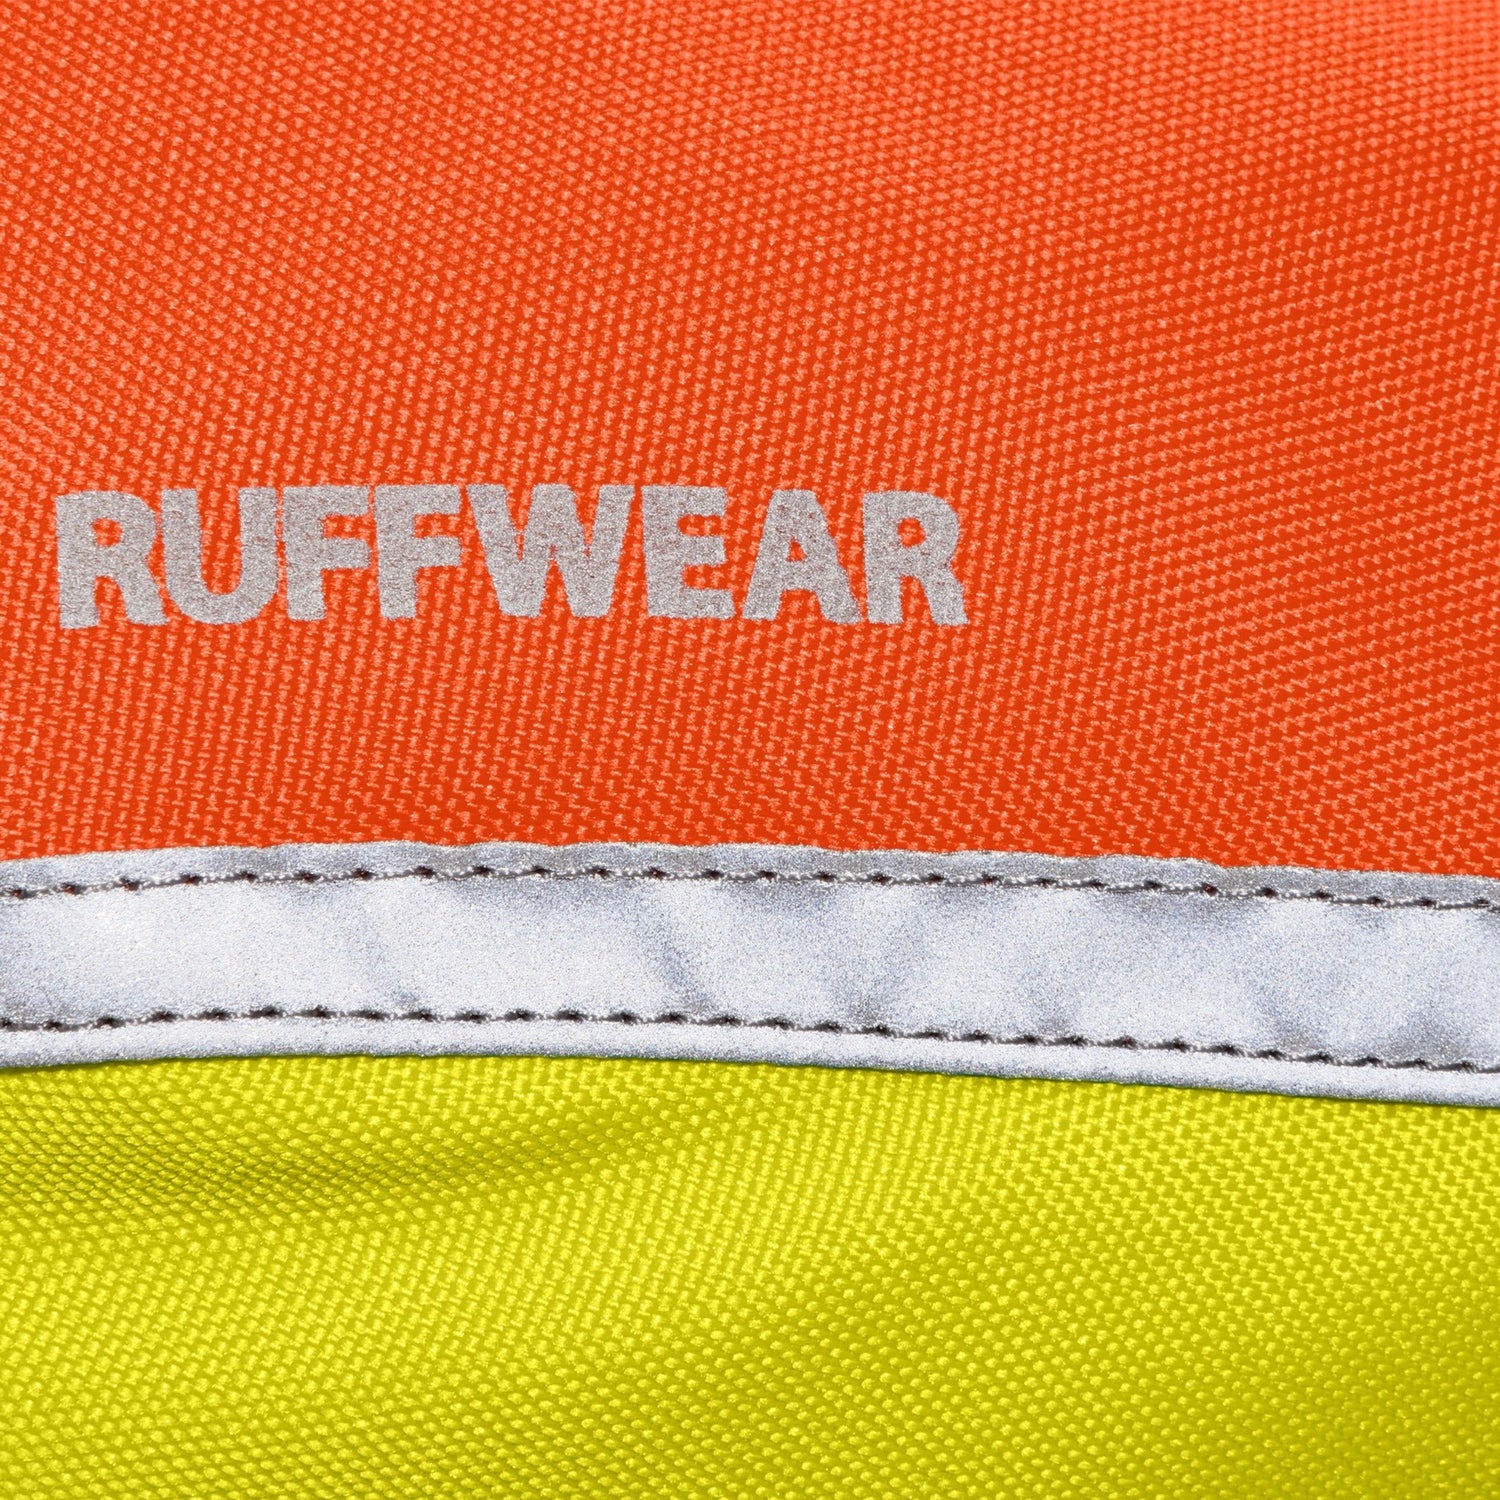 Ruffwear Lumenglow High-Vis Jacket, Hundewarnweste - Woofshack